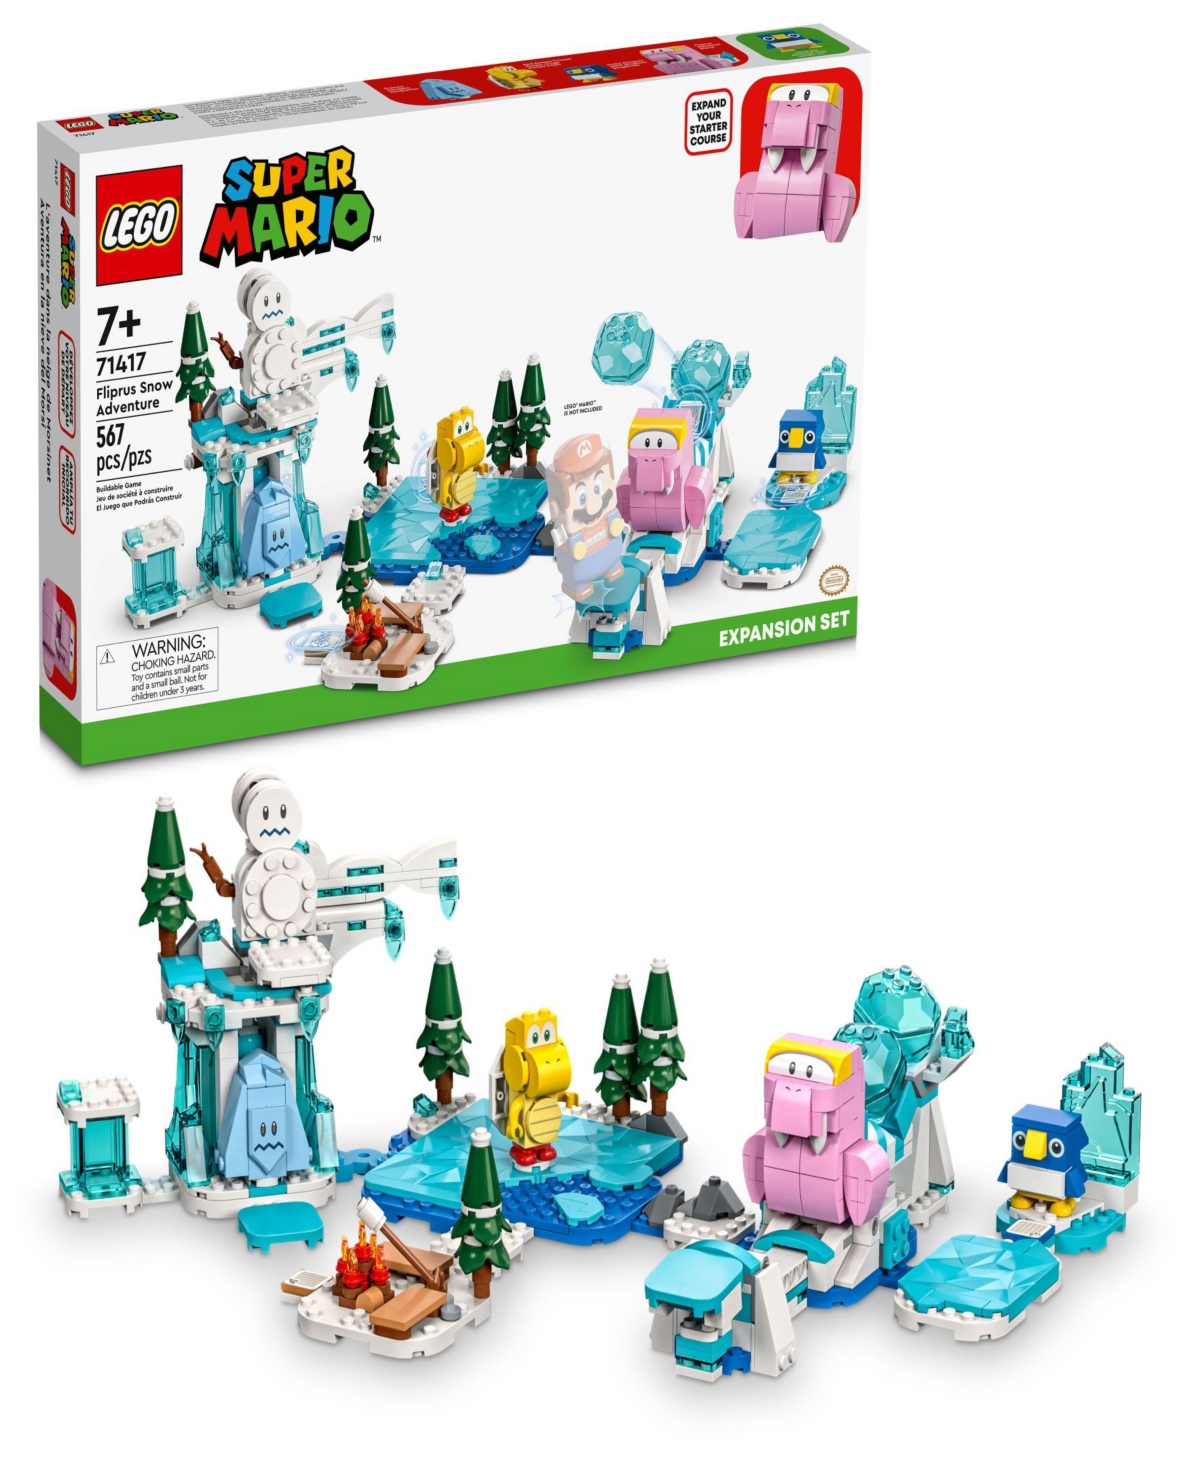 Lego Super Mario Fliprus Snow Adventureâ Expansion Set 71417 Building Set, 567 Pieces In Multicolor